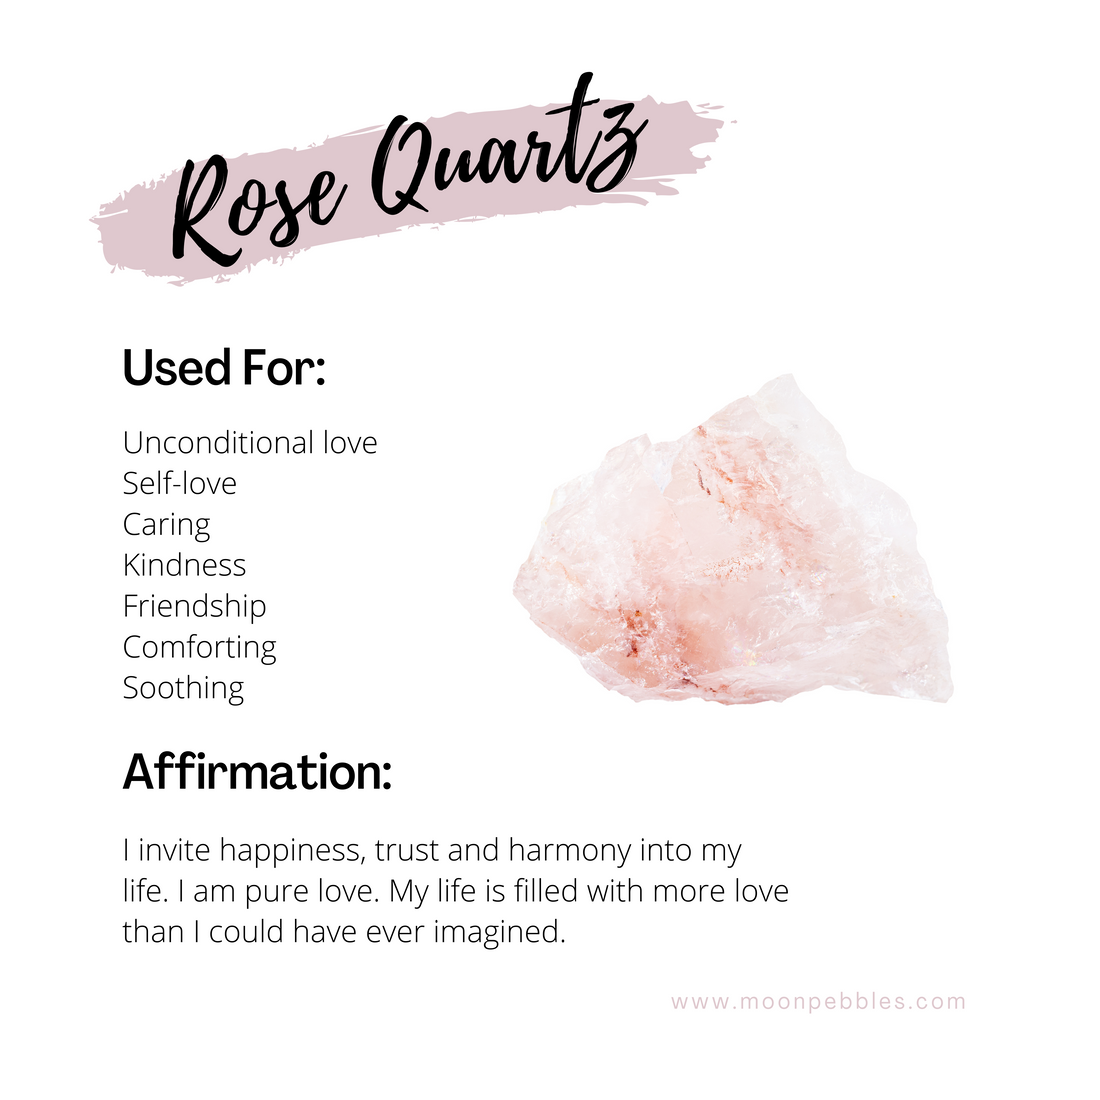 Healing Properties of Rose Quartz